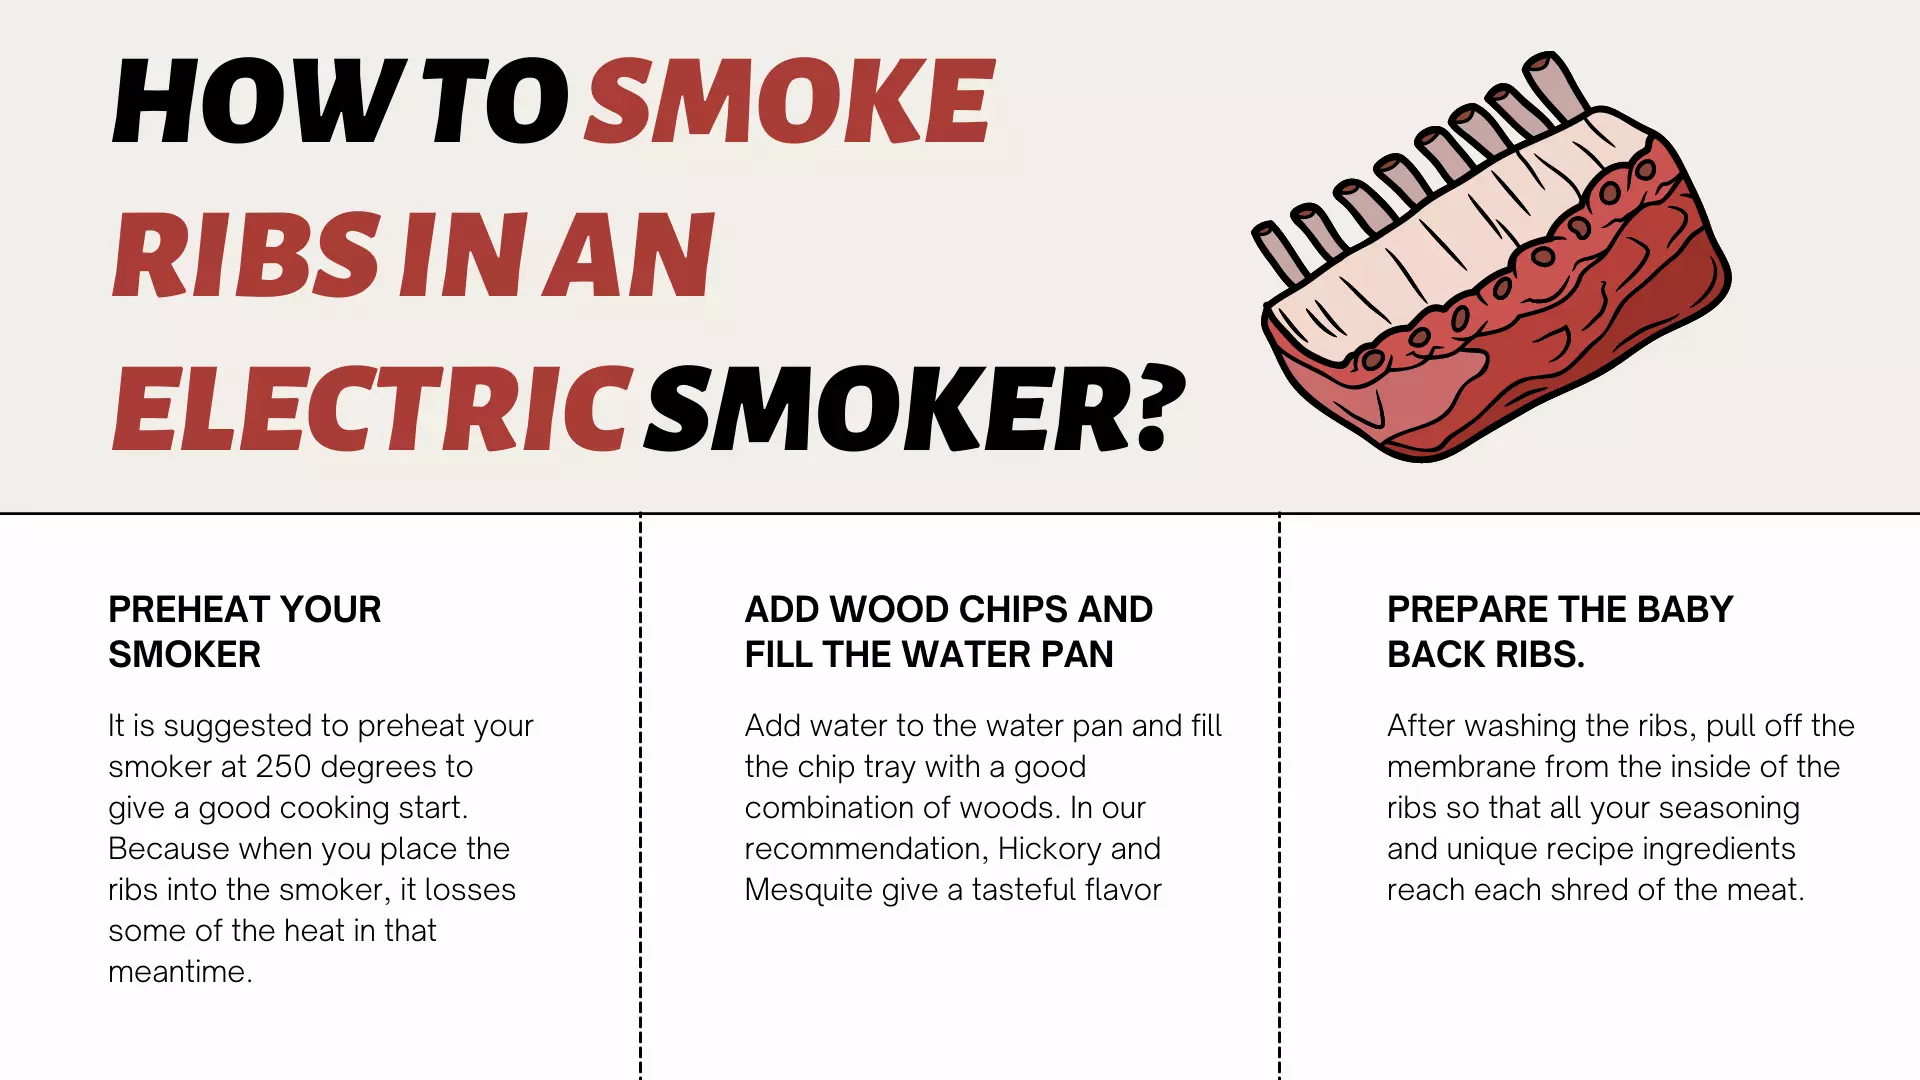 HOW TO SMOKE RIBS IN AN ELECTRIC SMOKER